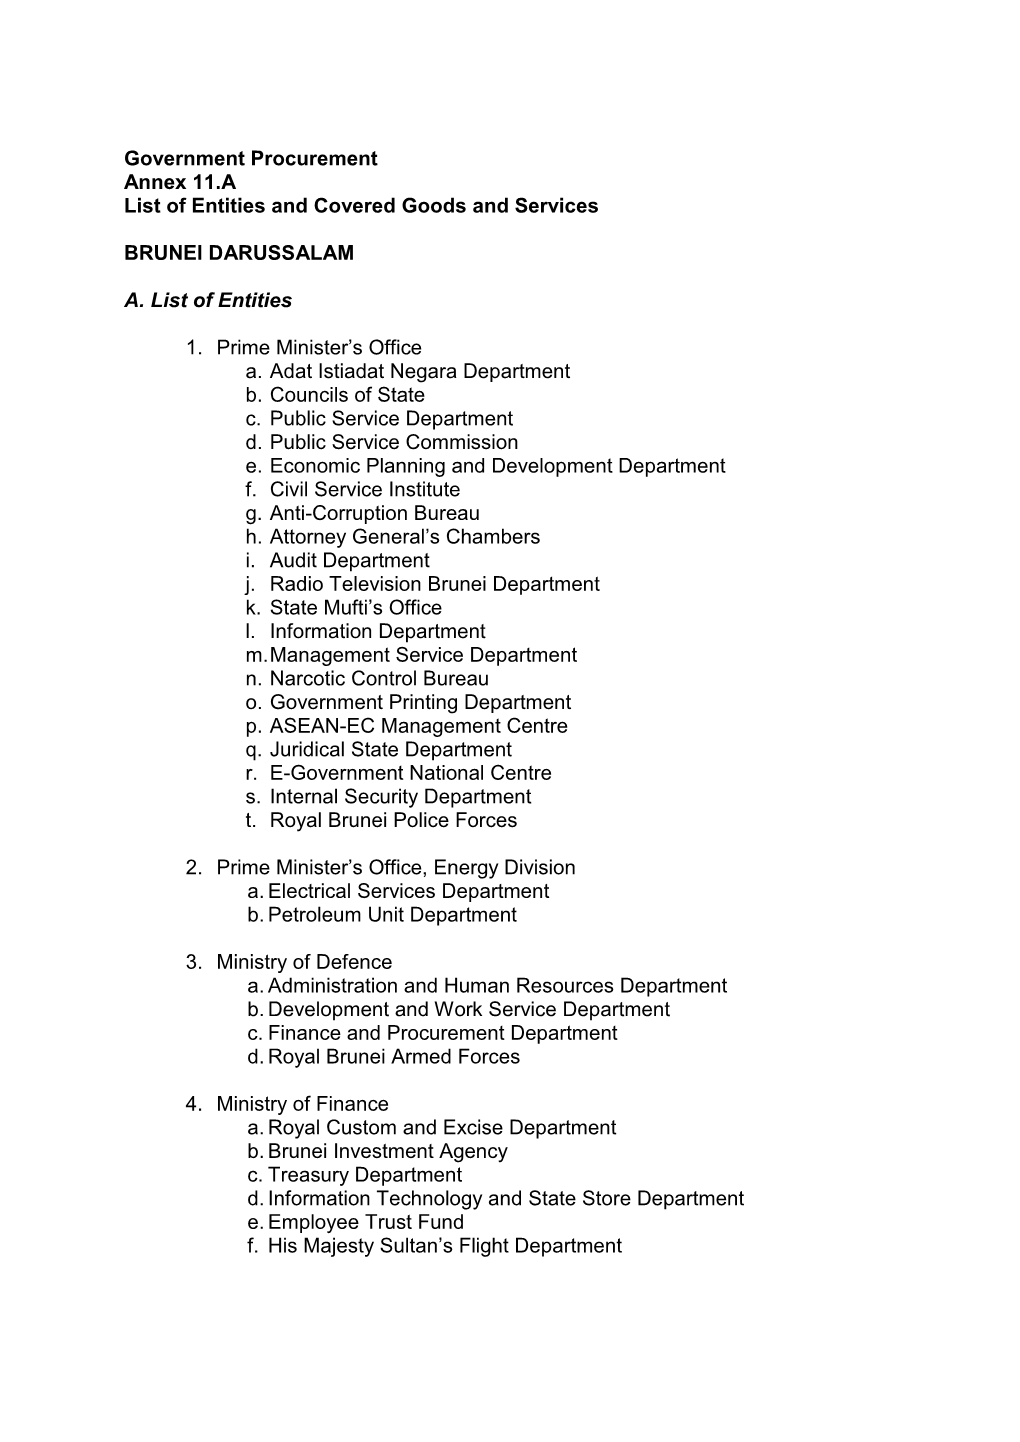 Brunei's Government Procurement List Of